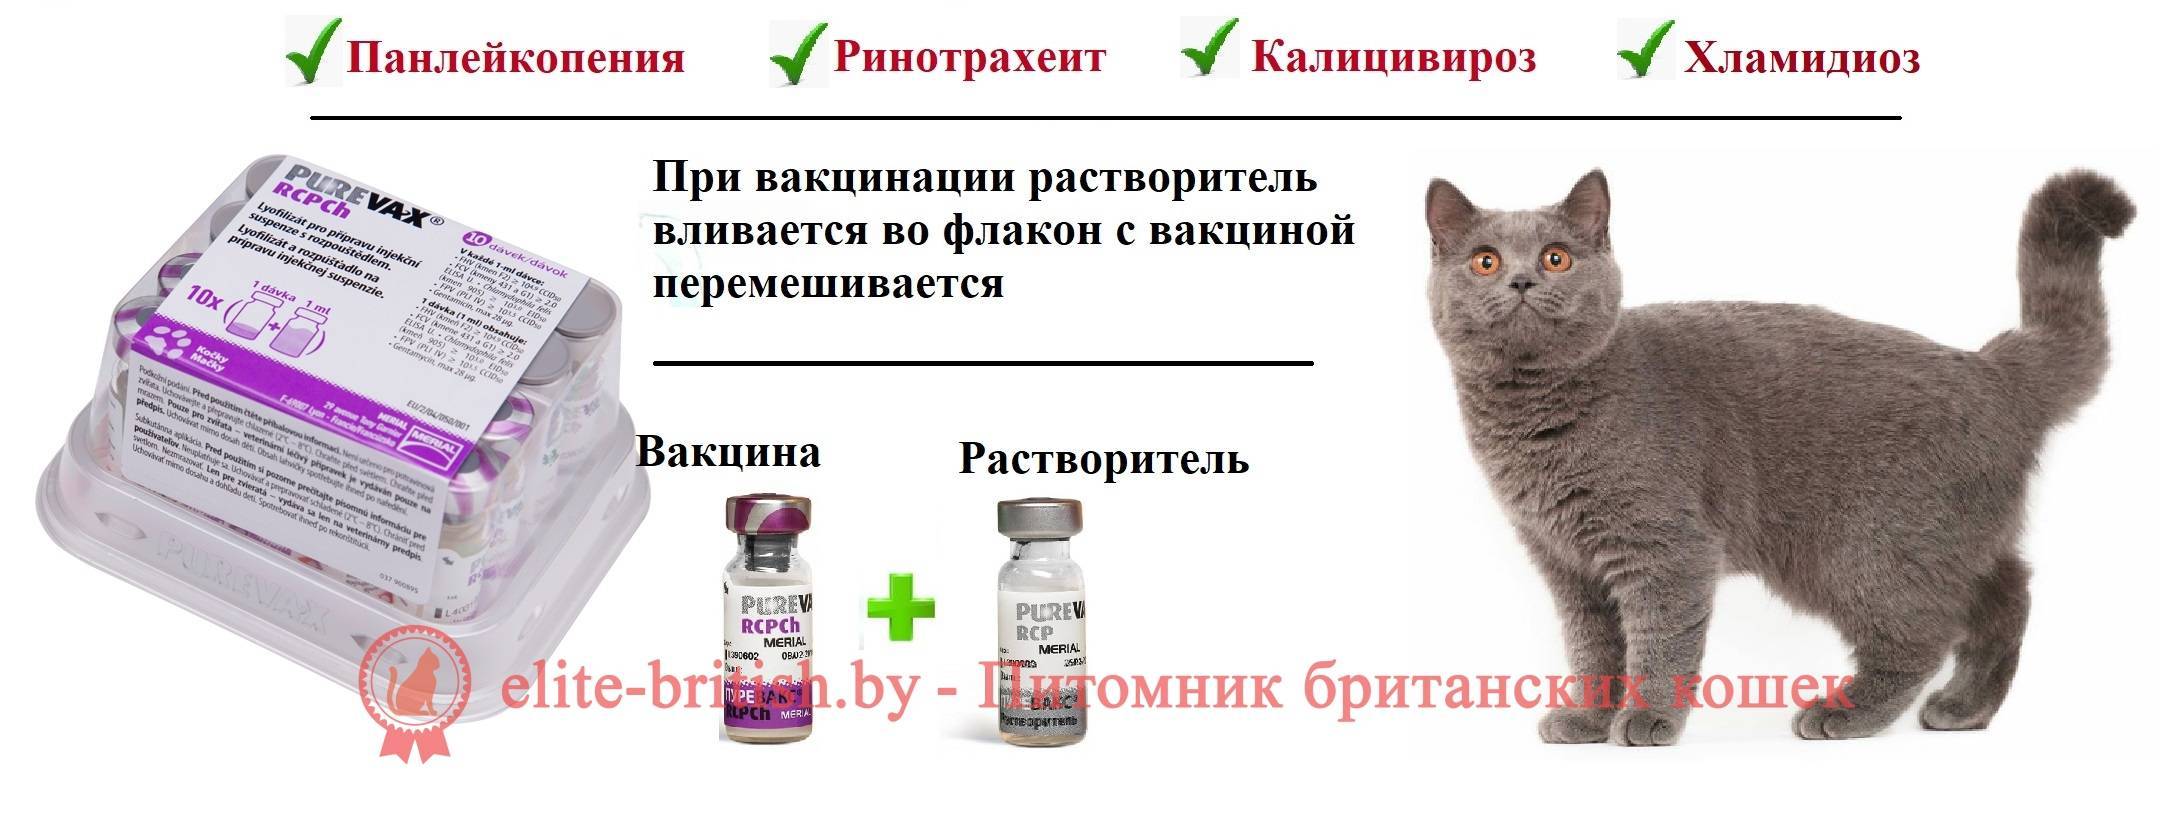 Прививка от бешенства кошке. график вакцинирования